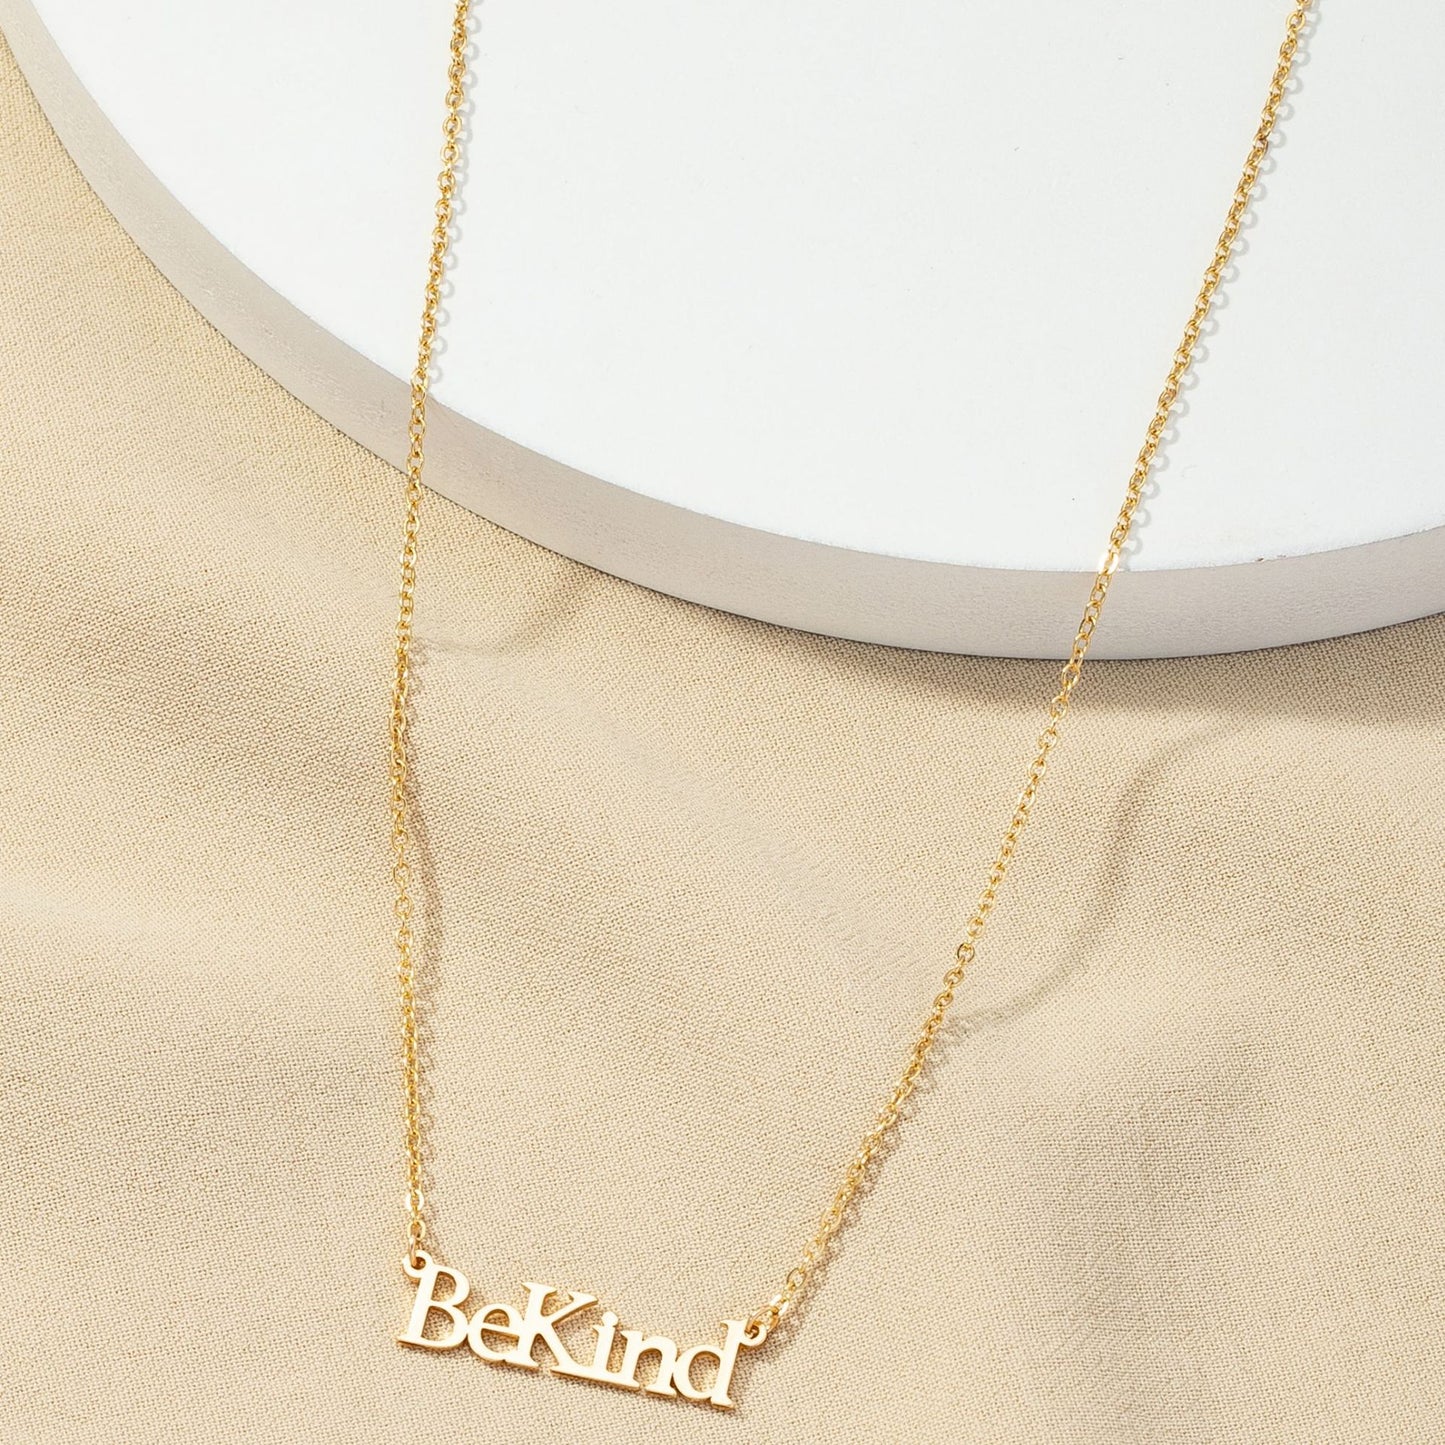 Fashionable Bekind Letter Necklace - Vienna Verve Collection